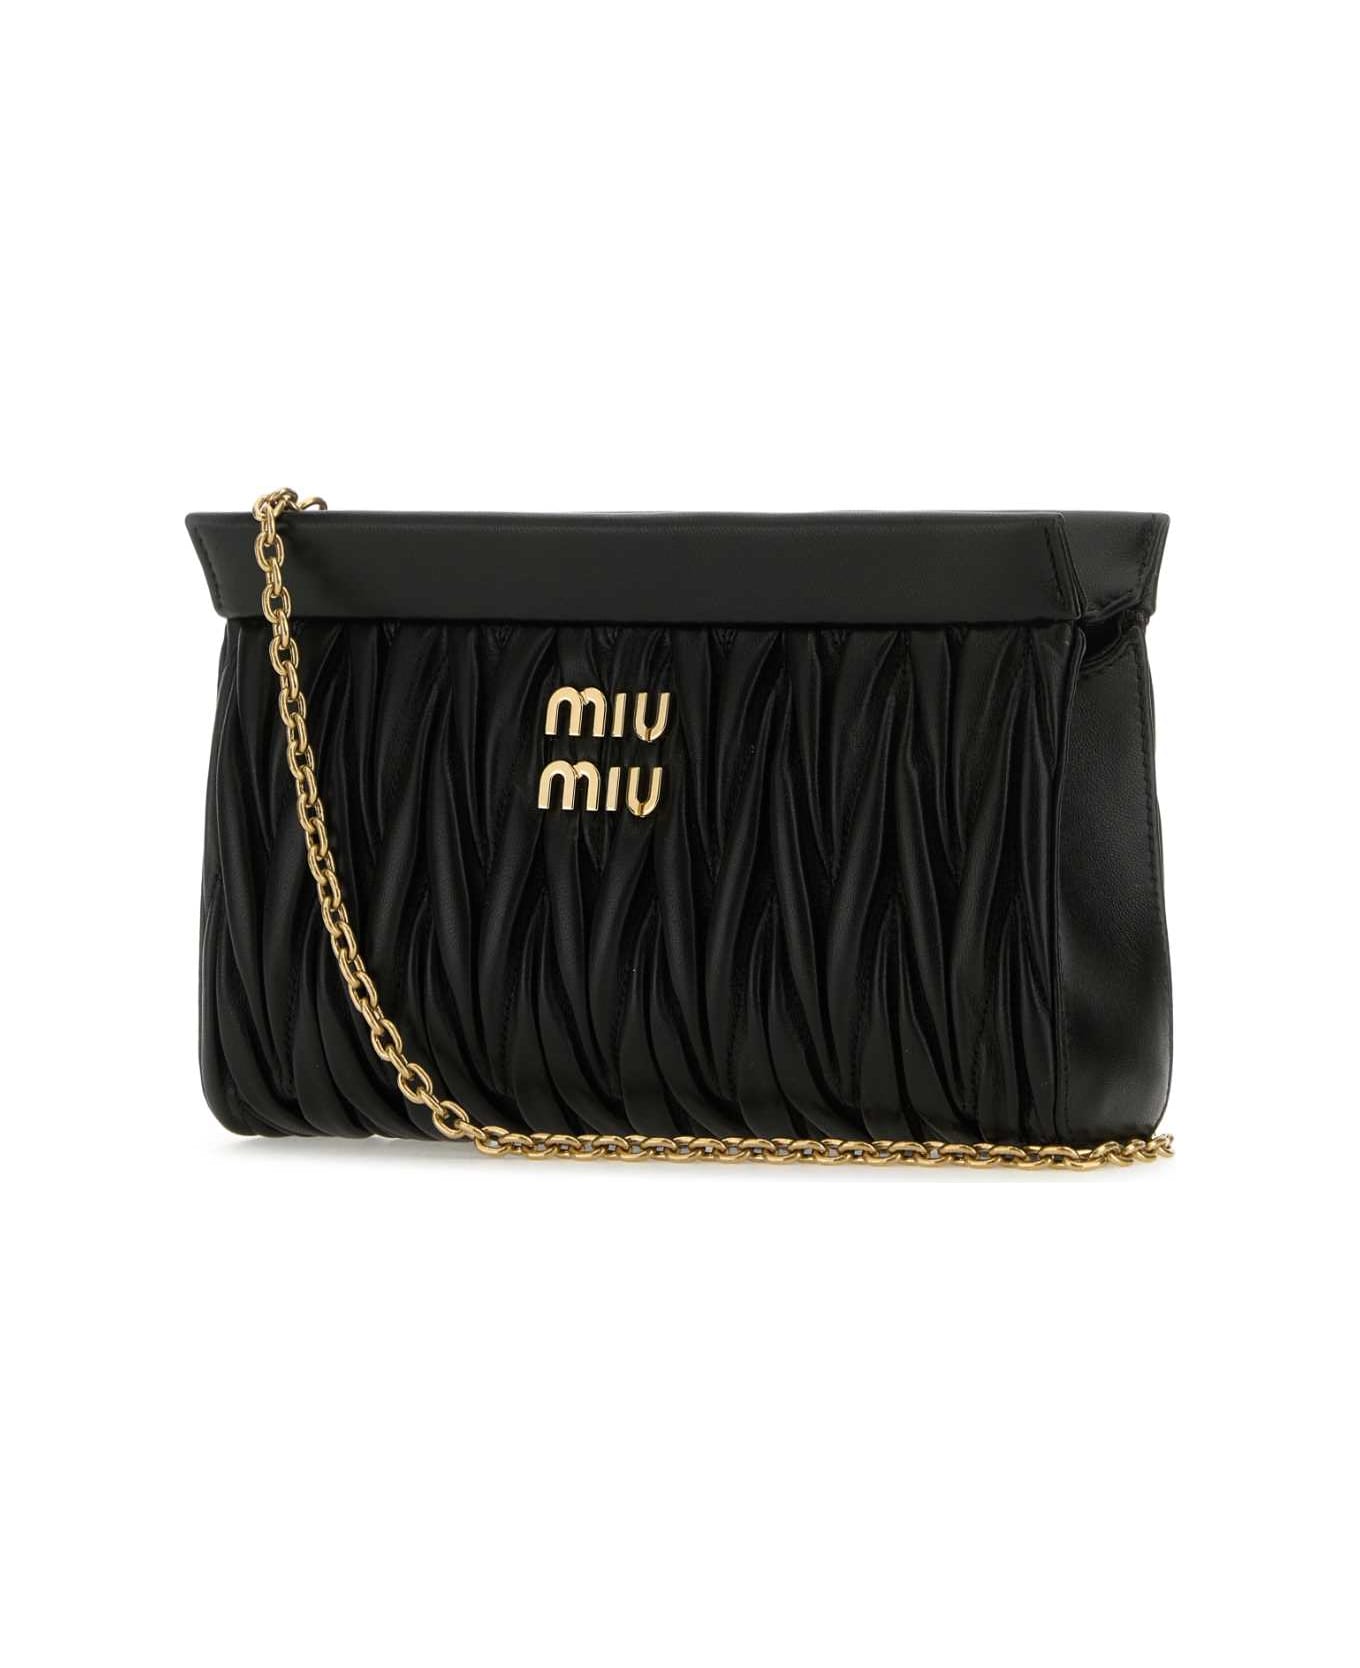 Miu Miu Black Leather Crossbody Bag - NERO